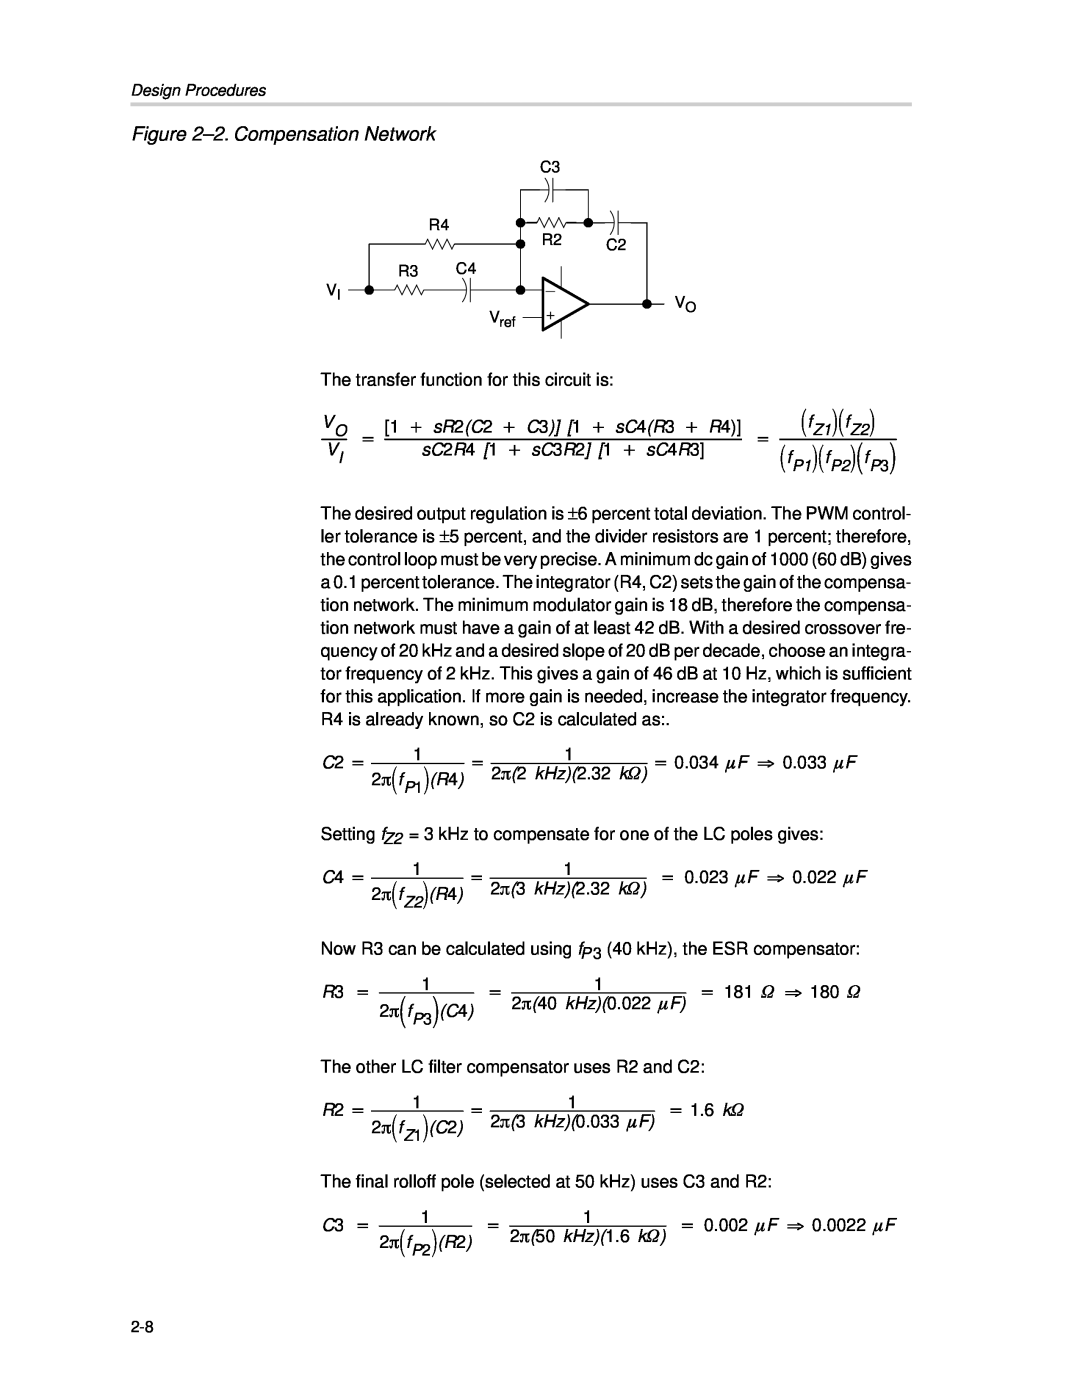 Texas Instruments SLVP089 manual 2. Compensation Network 